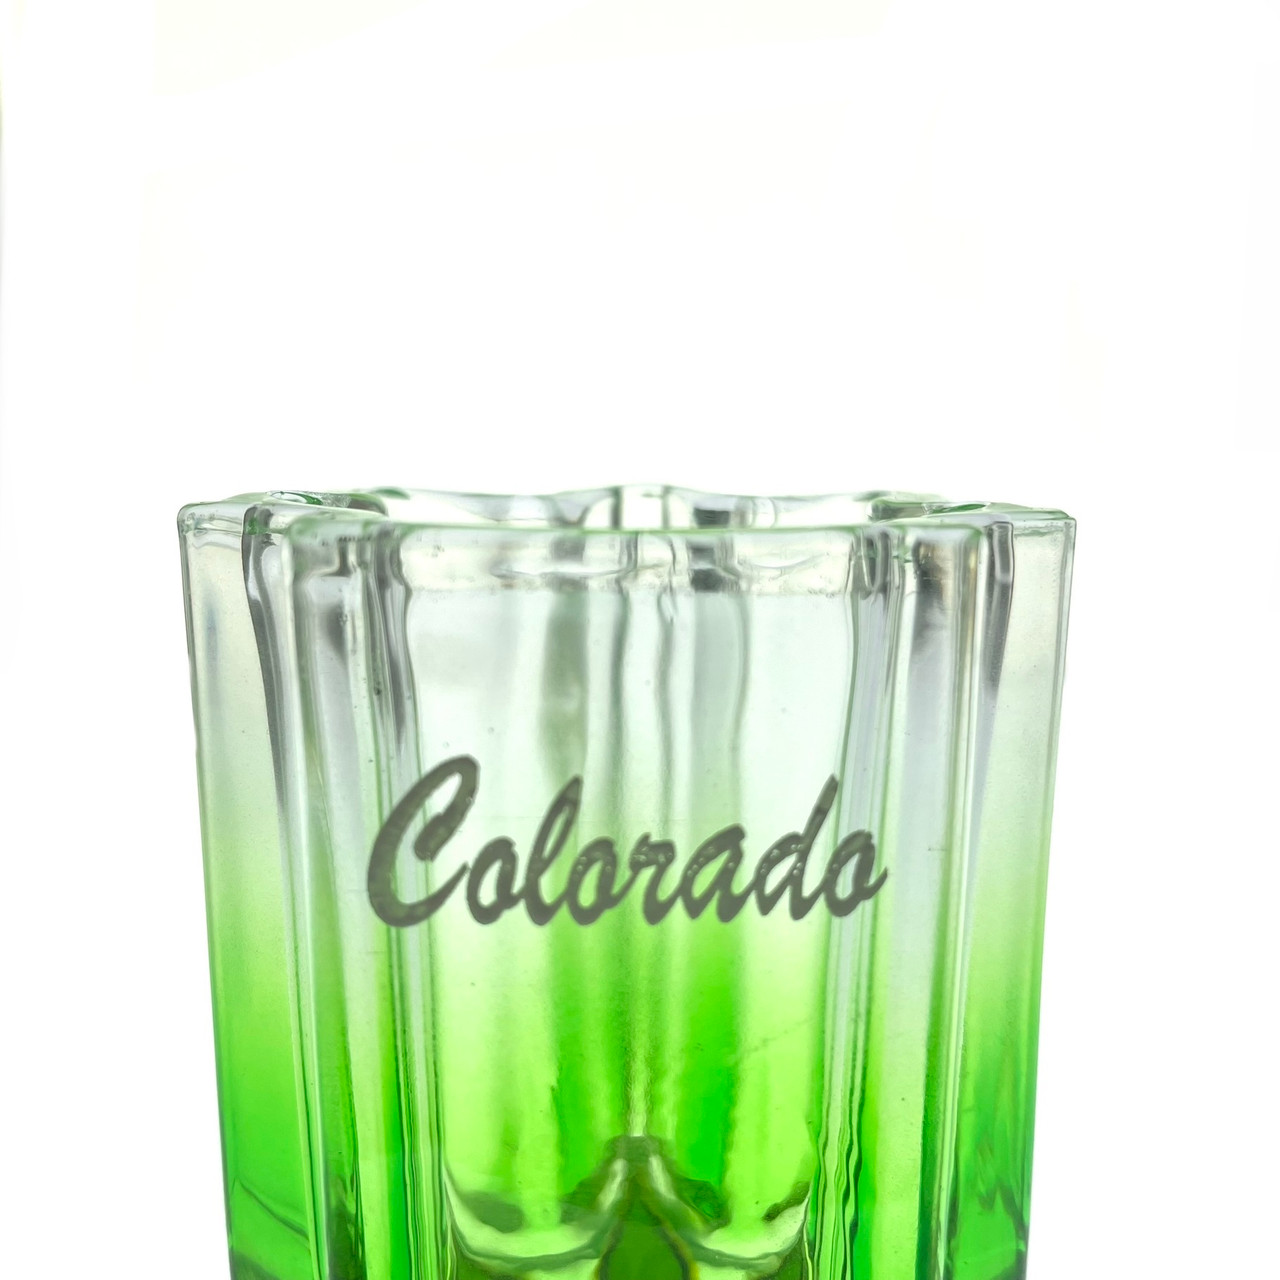 BIG SIP ON THE GO Colorado Weed Leaf Pot Glass Mason Jar With Airtight  Green Lid 3.25 x 2.9 - Paykoc Imports, Inc.